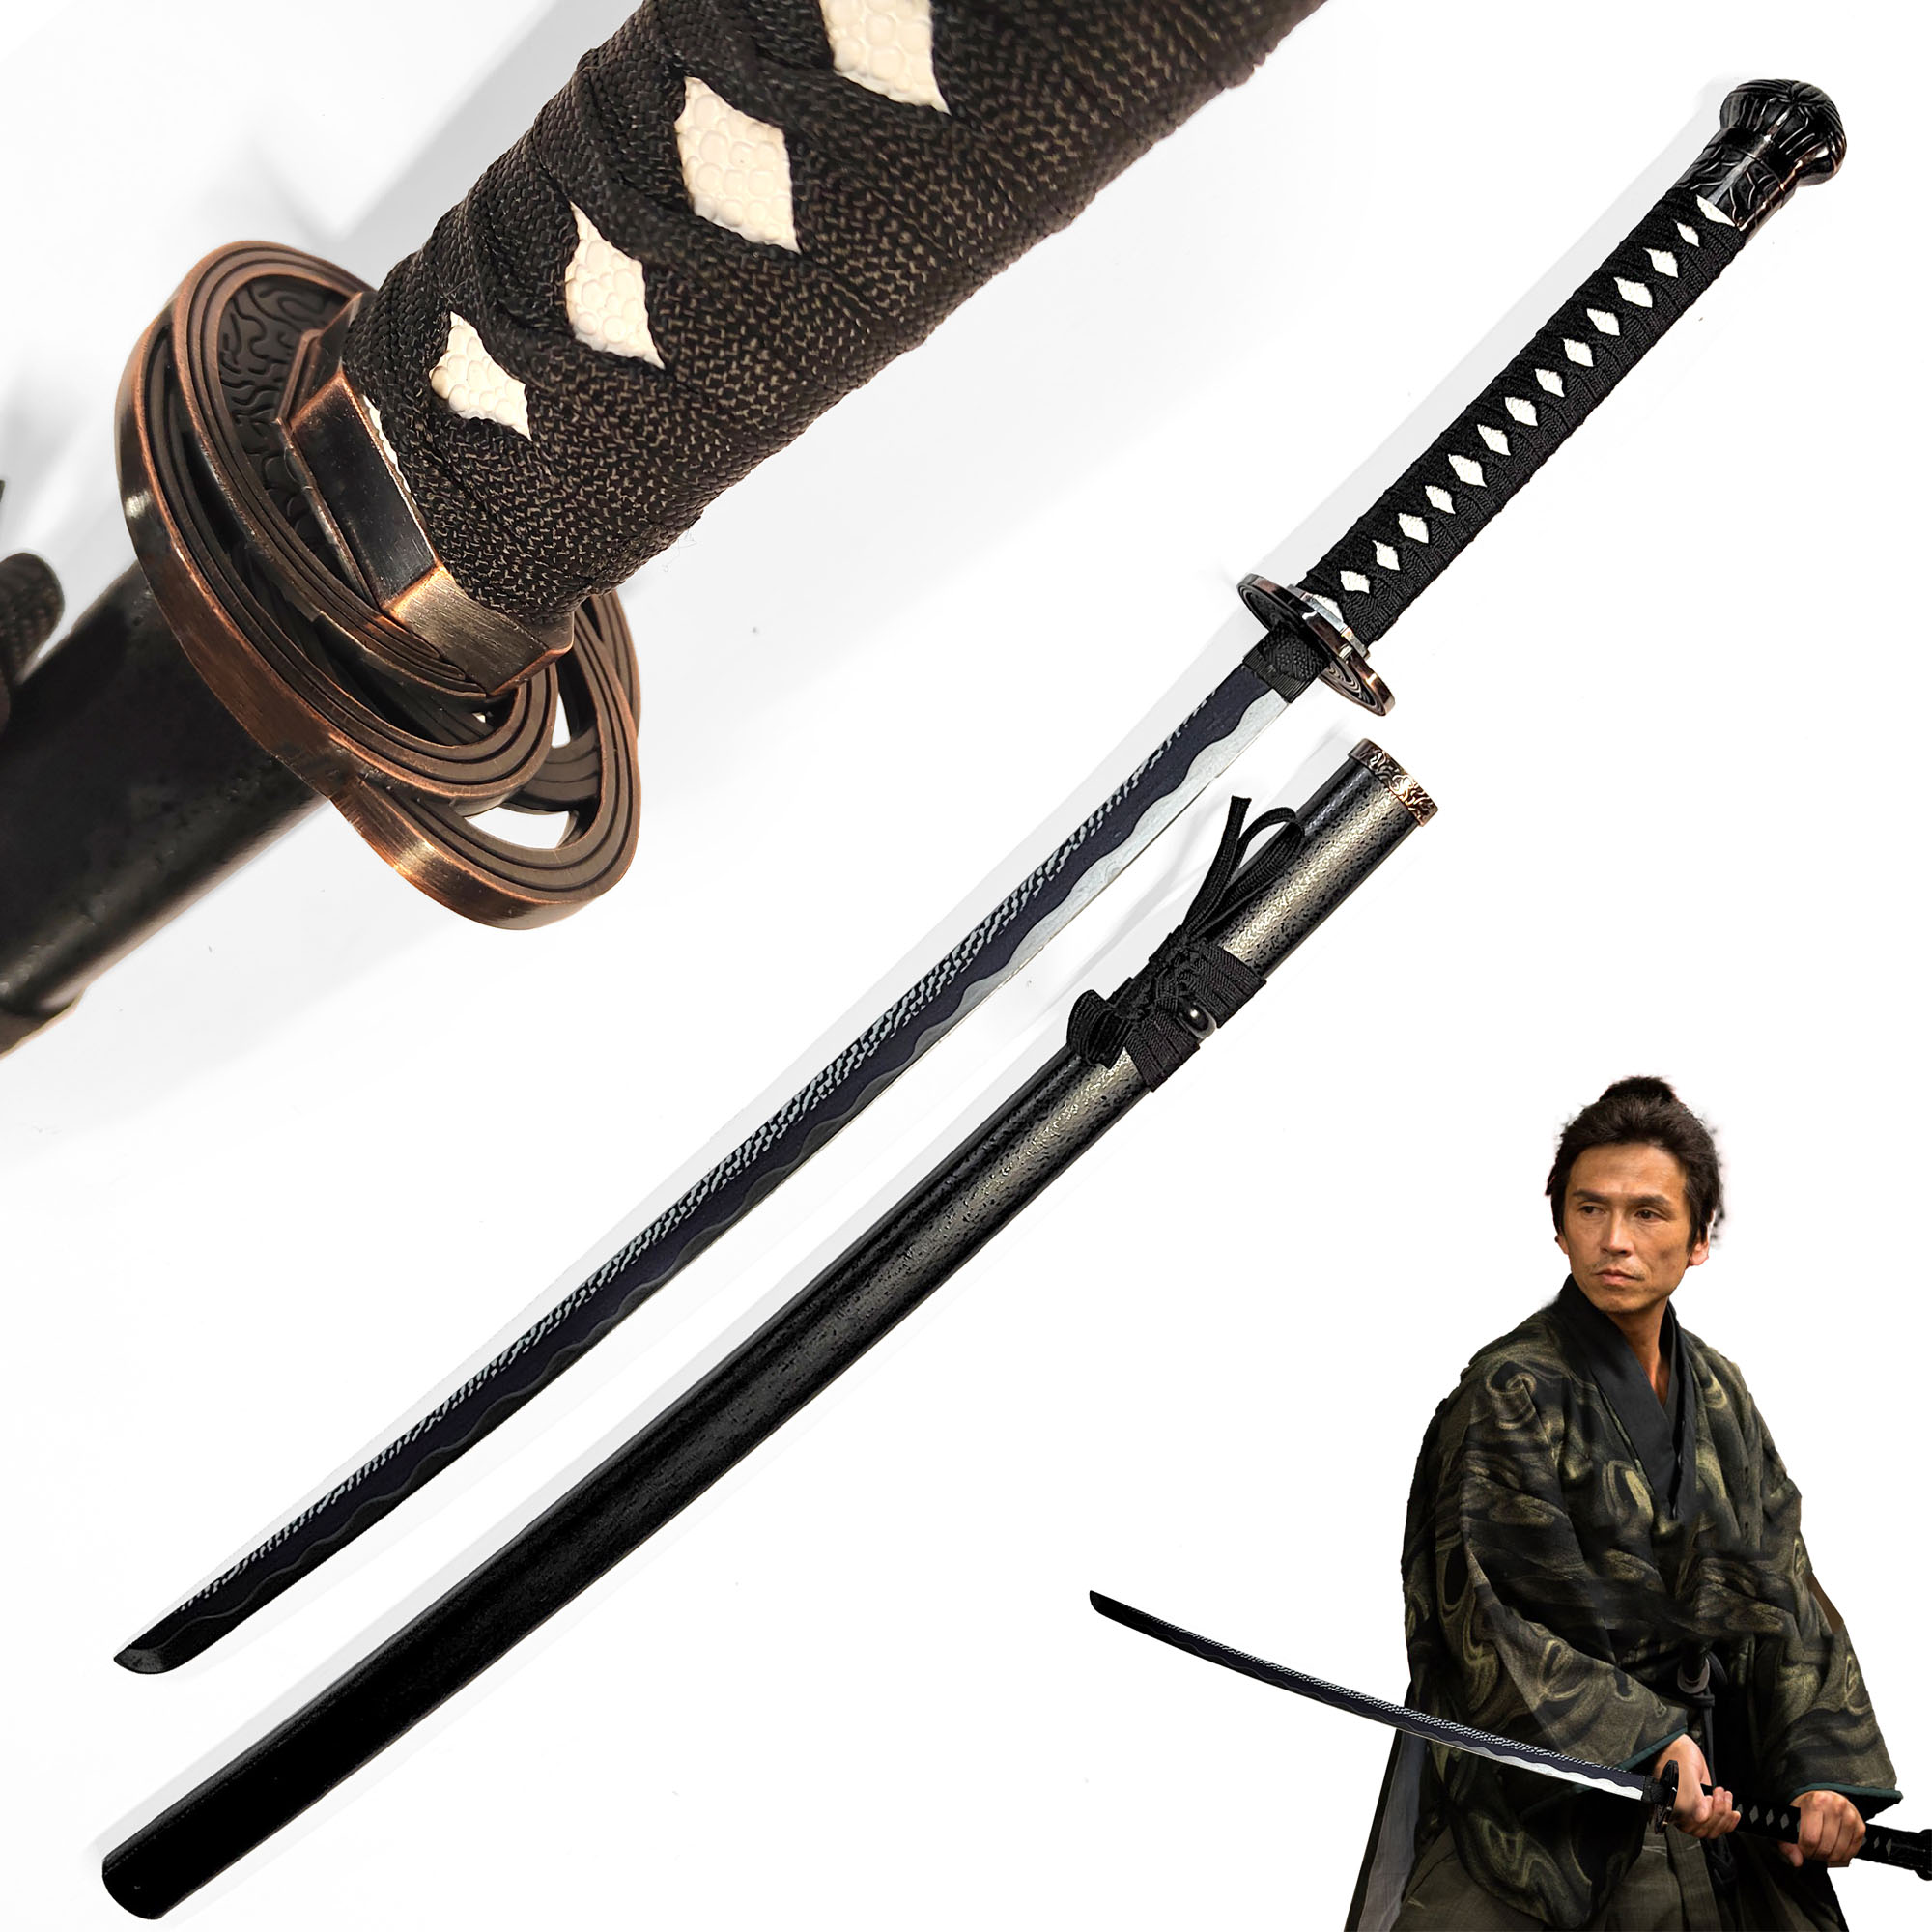 Elden Ring - Moonveil Sword with Sheath